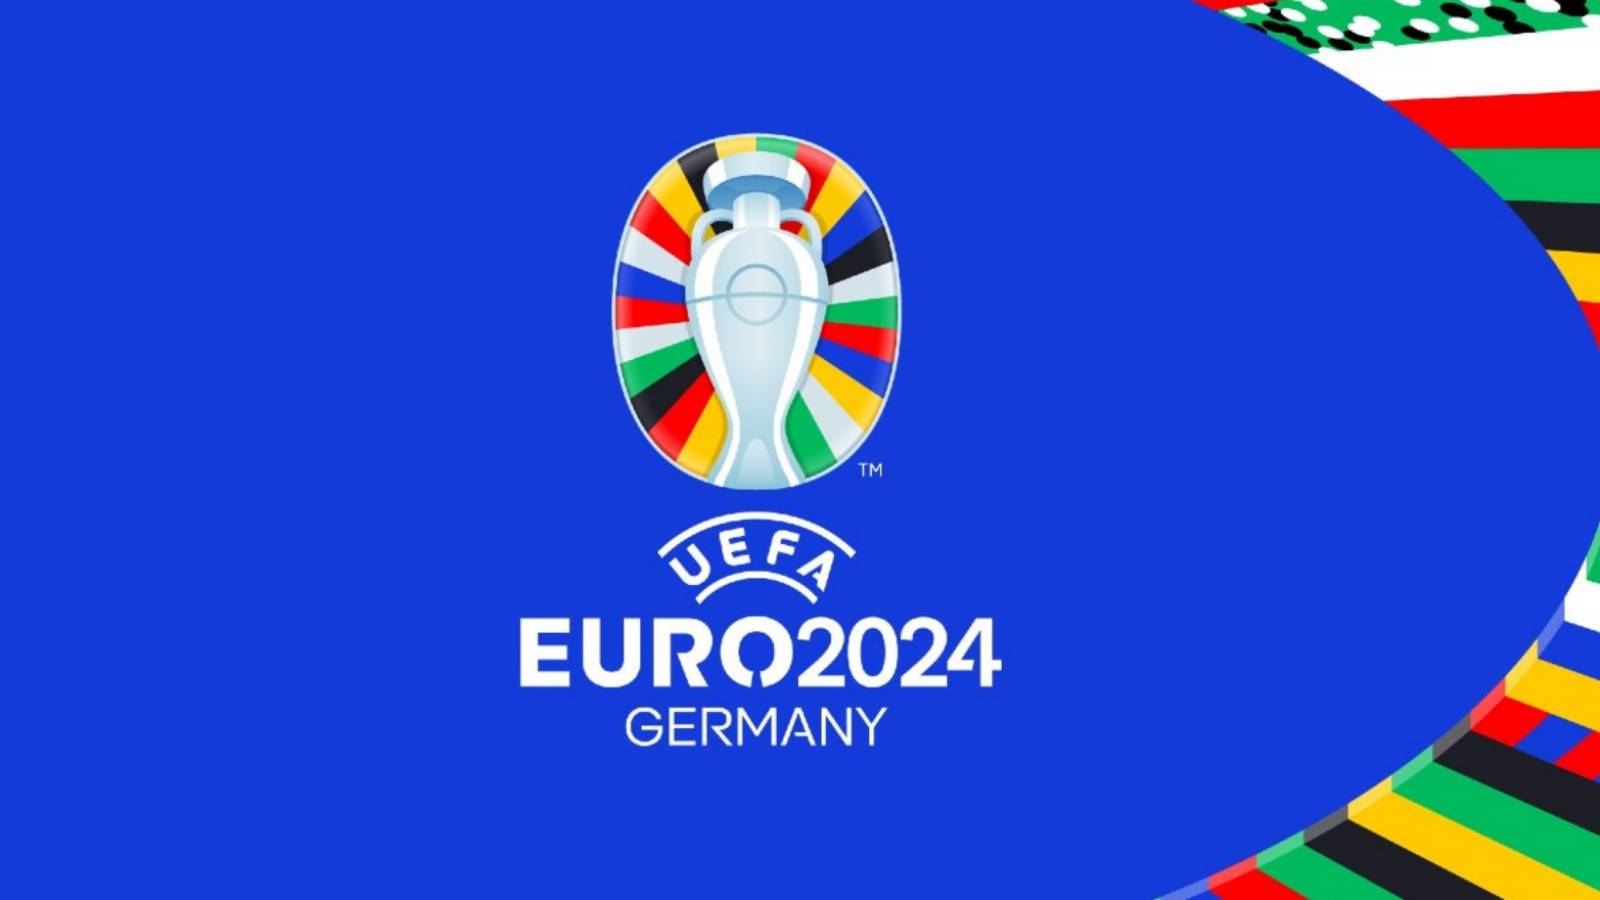 EURO 2024-ZIEHLUNG LIVE Rumänien-Gruppen-Fußball-Europameisterschaft 2024